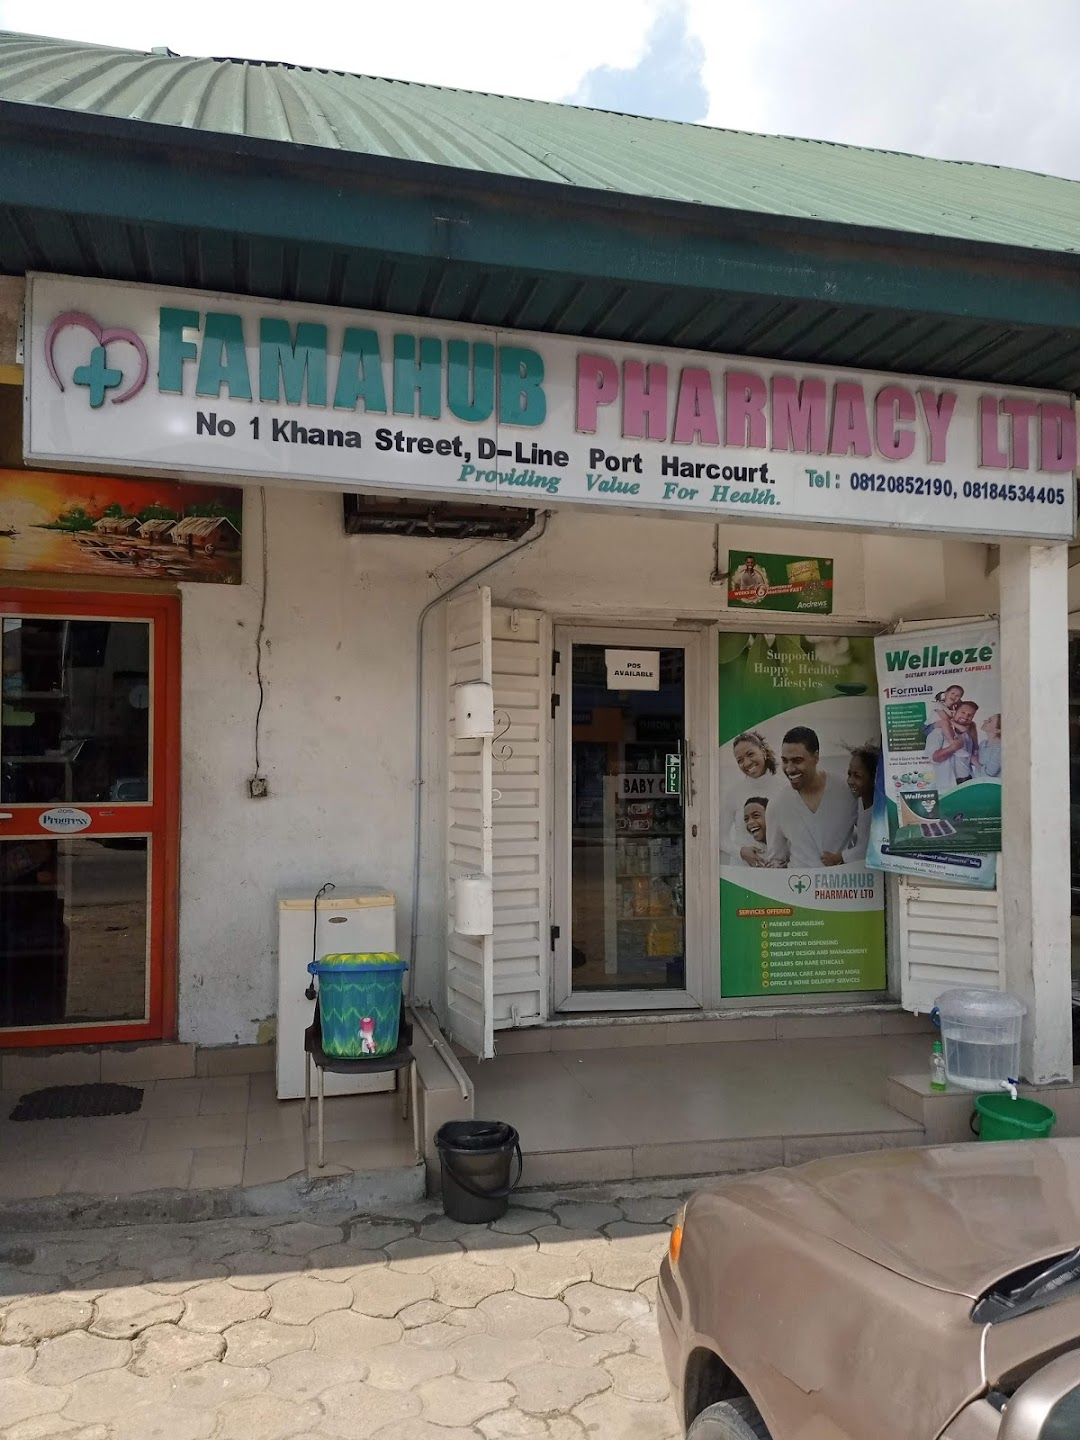 Famahub Pharmacy Ltd